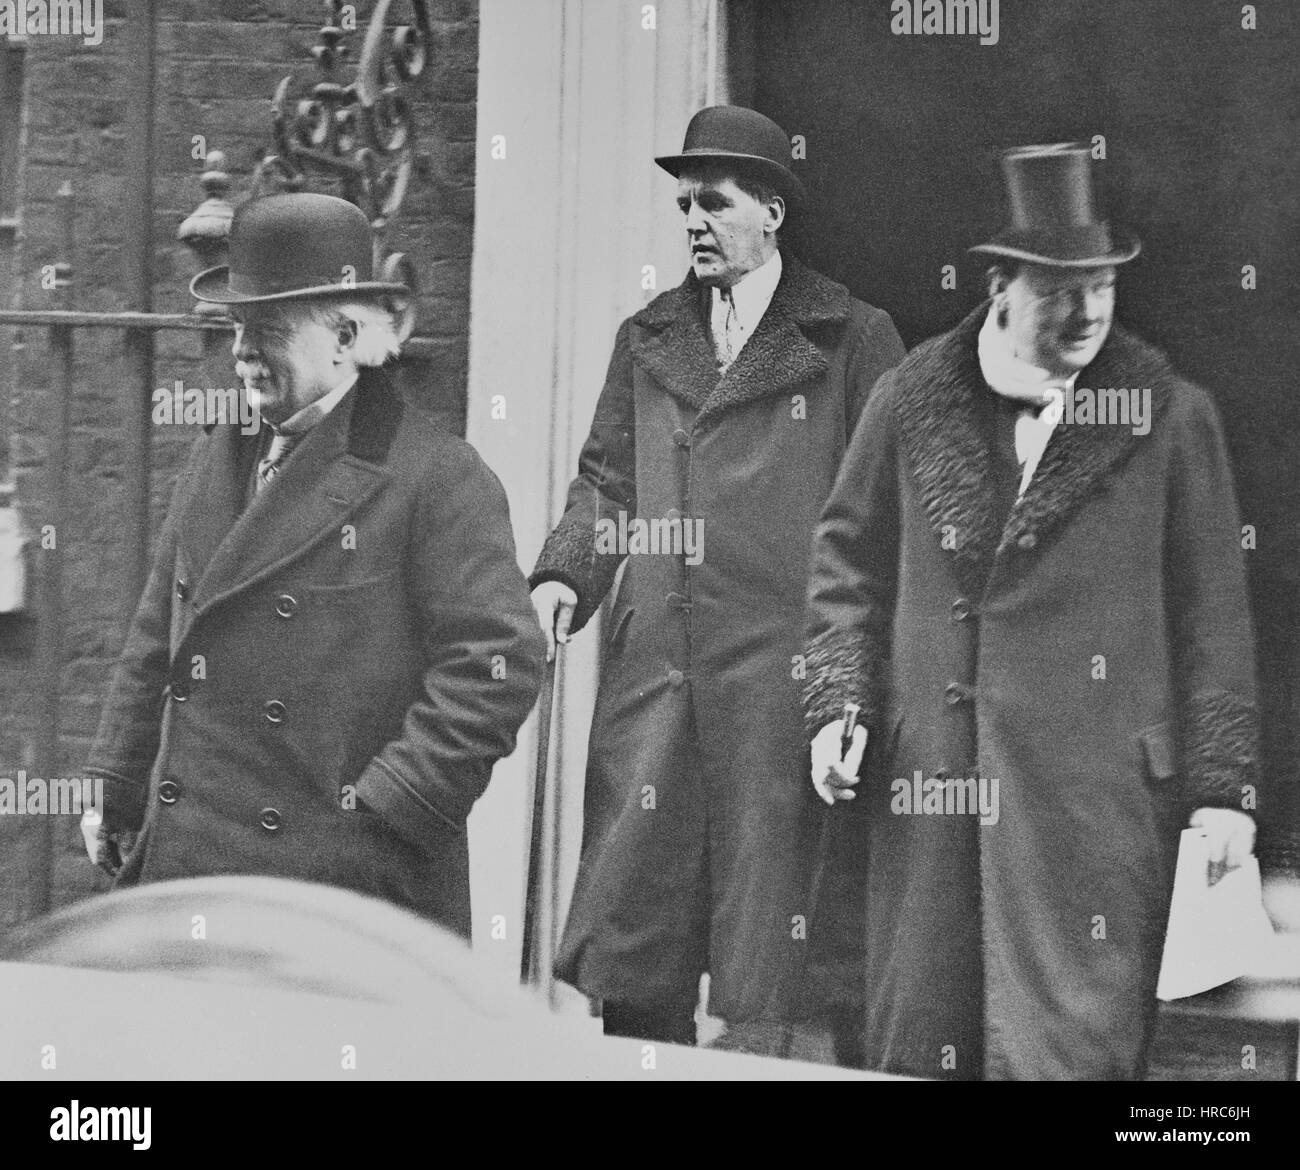 1921 David Lloyd George, Lord Birkenhead & Winston Churchill outside 10 Downing Street during the Anglo-Irish treaty talks Stock Photo